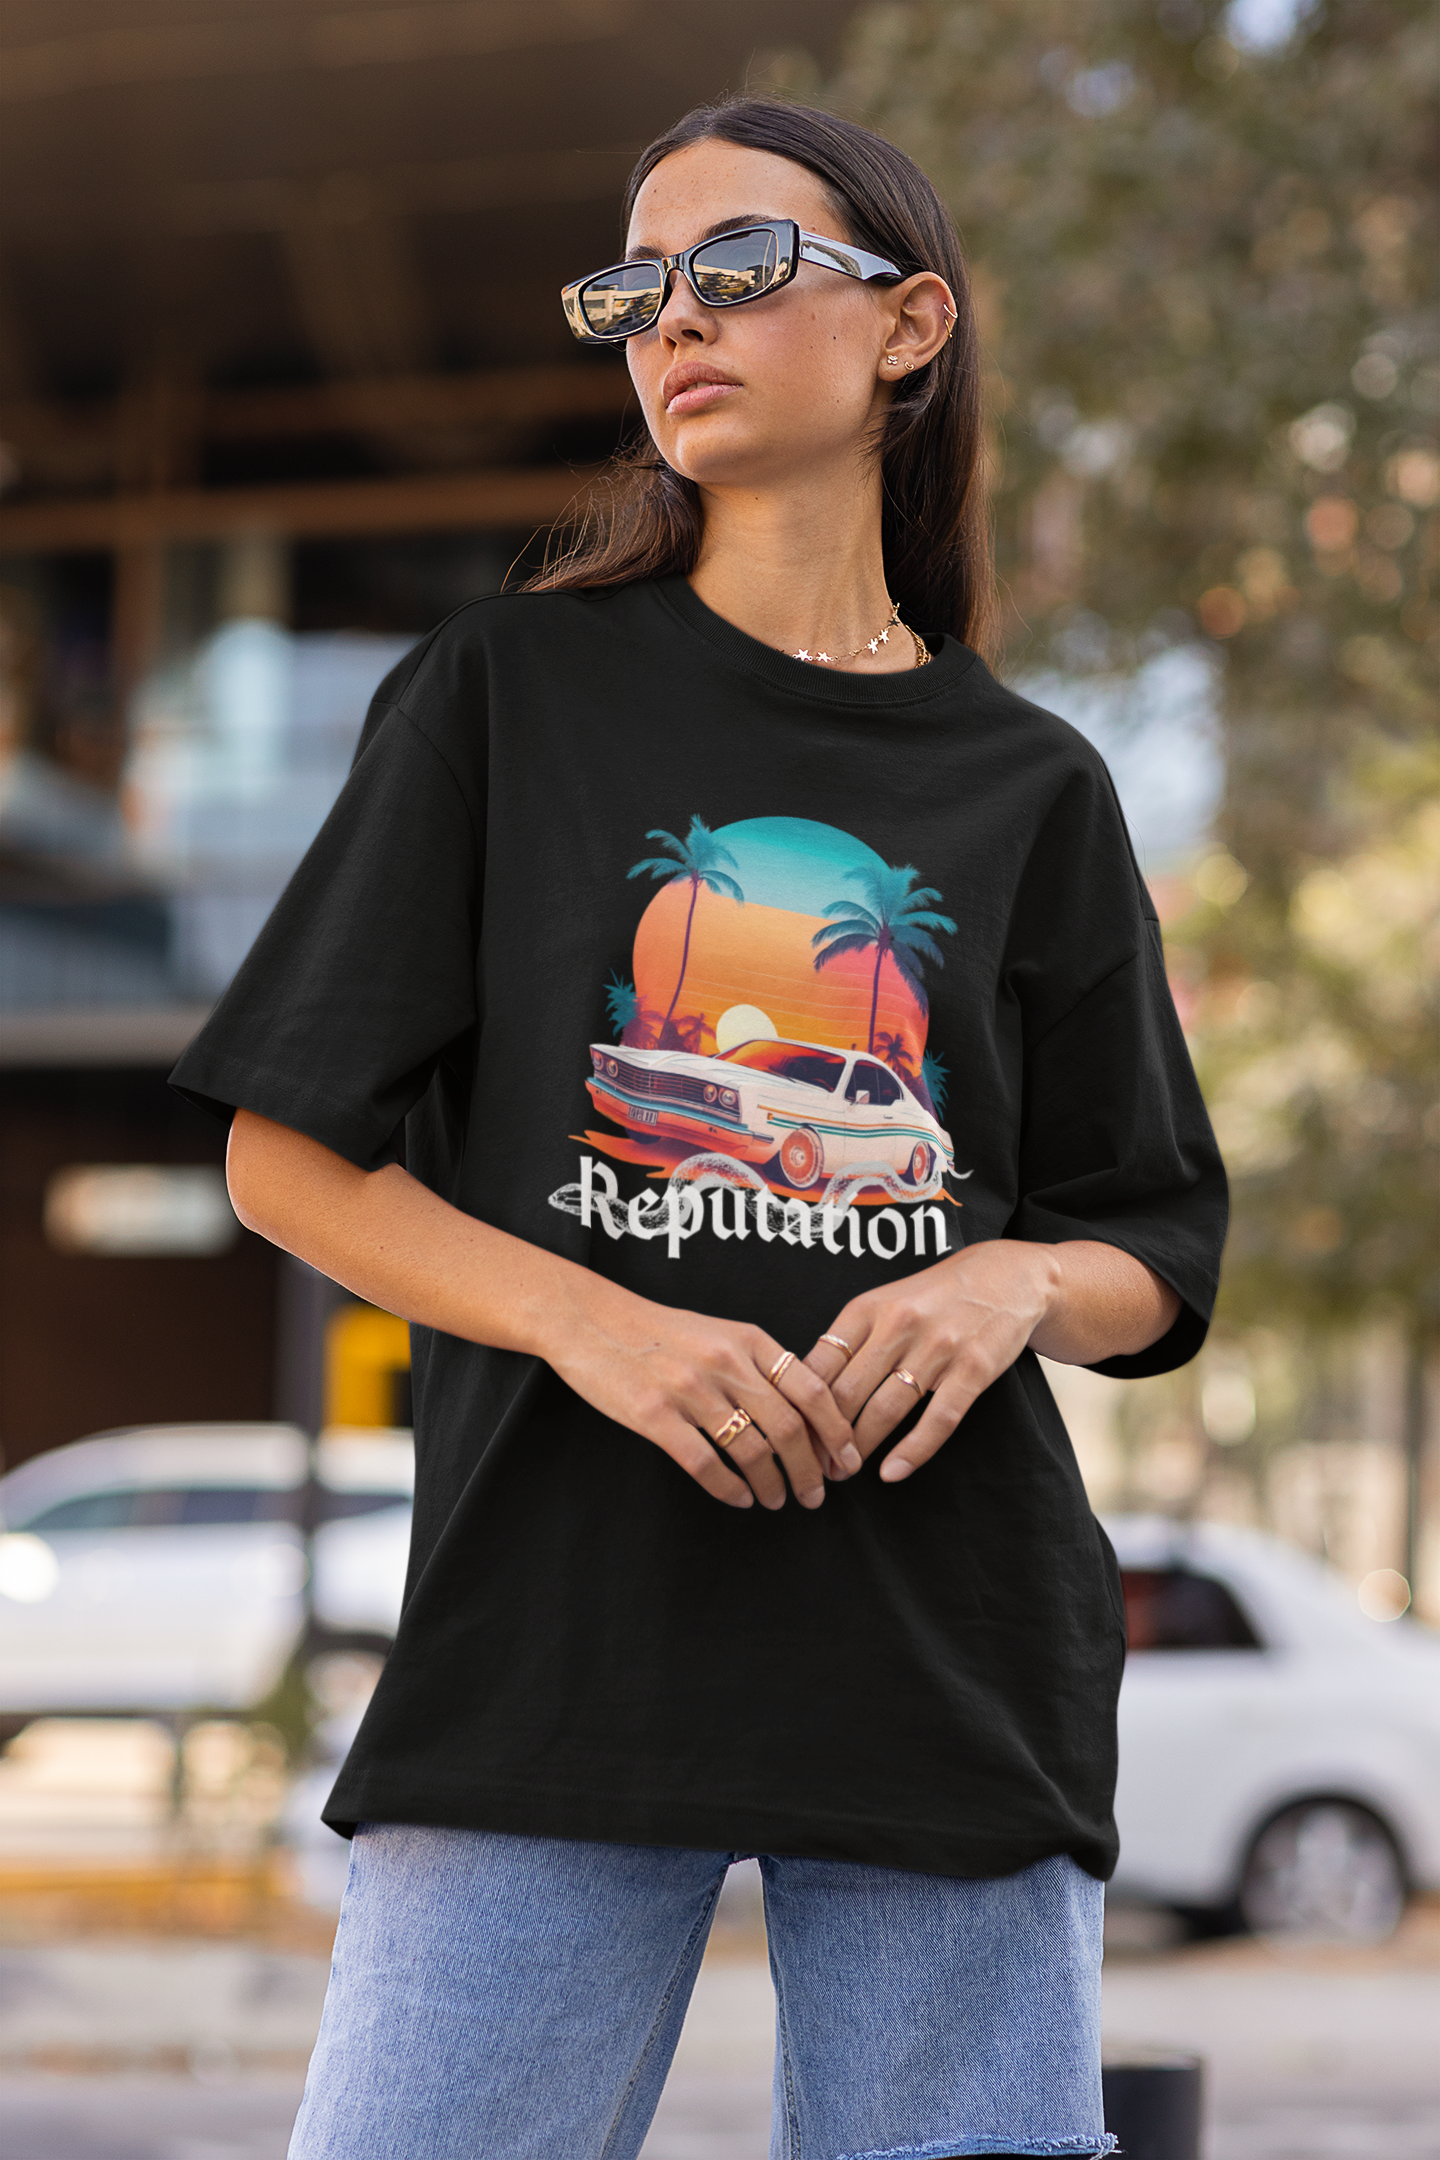 Reputation | Taylor Swift | Premium Oversized Half Sleeve Unisex T-Shirt